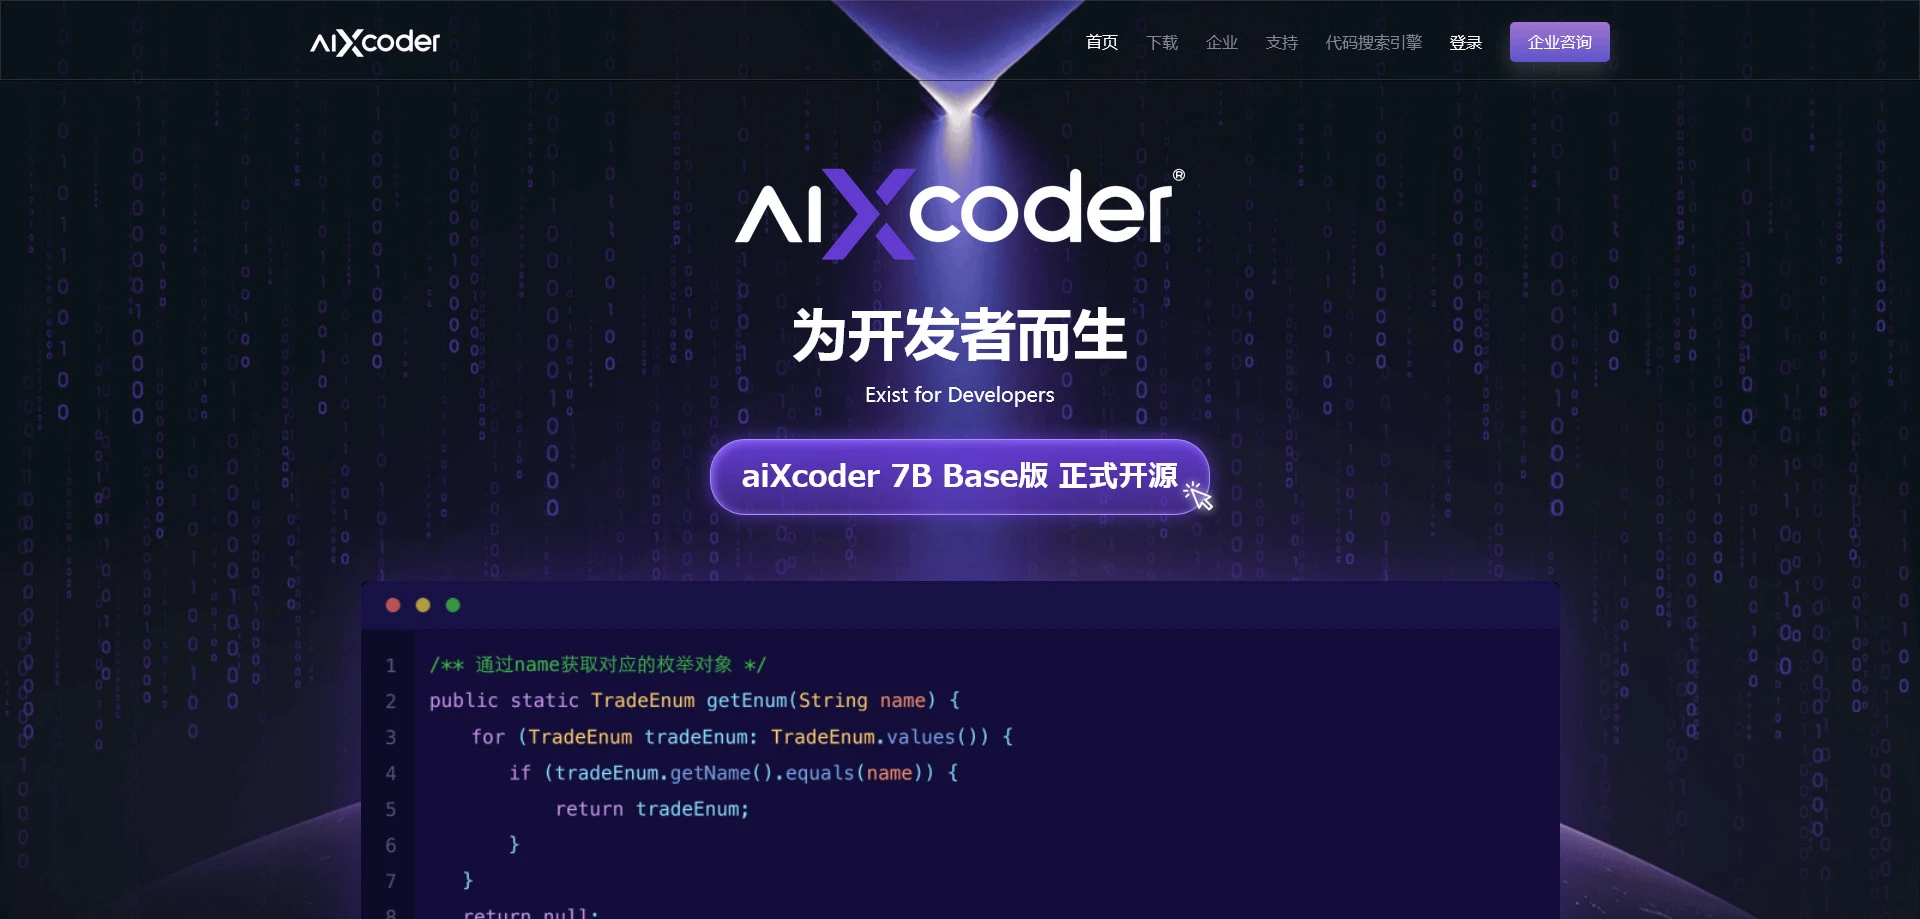 AI工具与服务推荐 - aiXcoder - AI智能化软件开发工具 - 特色图片